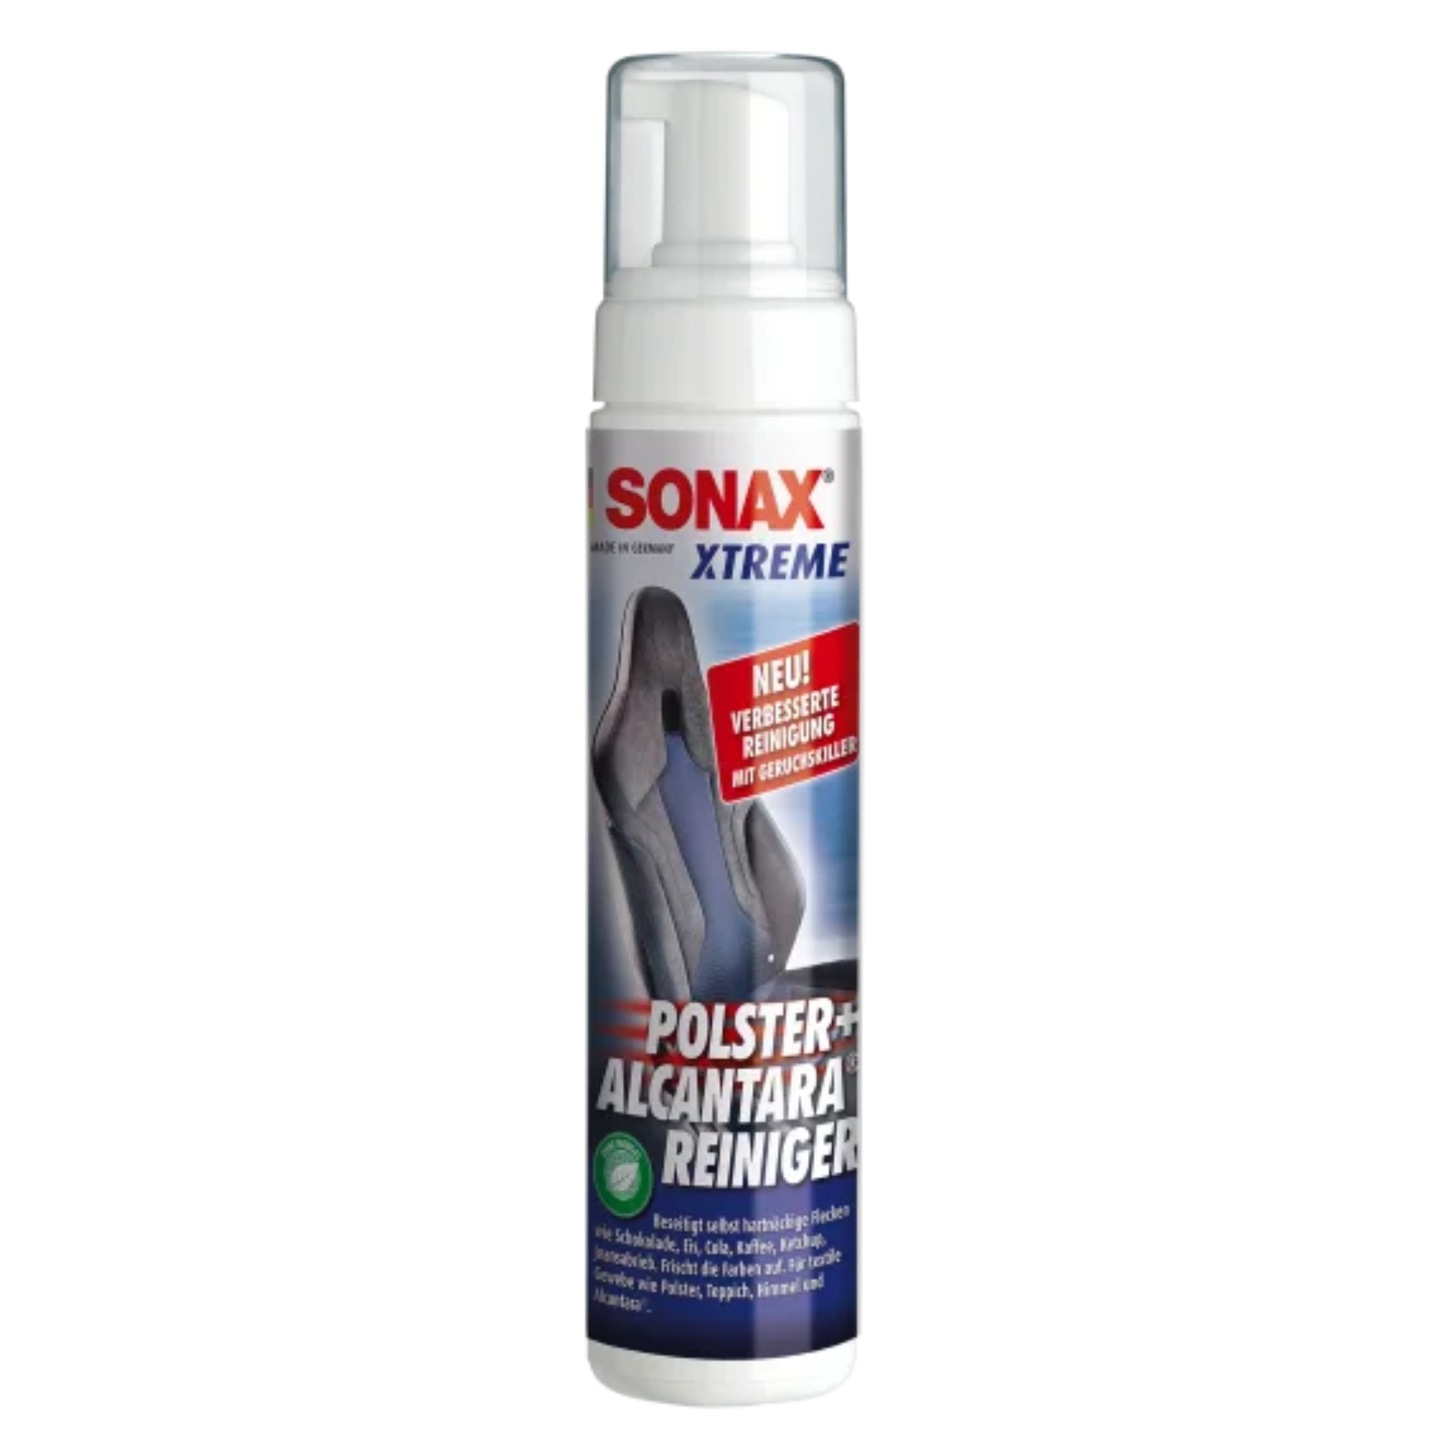 SONAX XTREME Polster + Alcantara® Reiniger treibgasfrei, 250ml